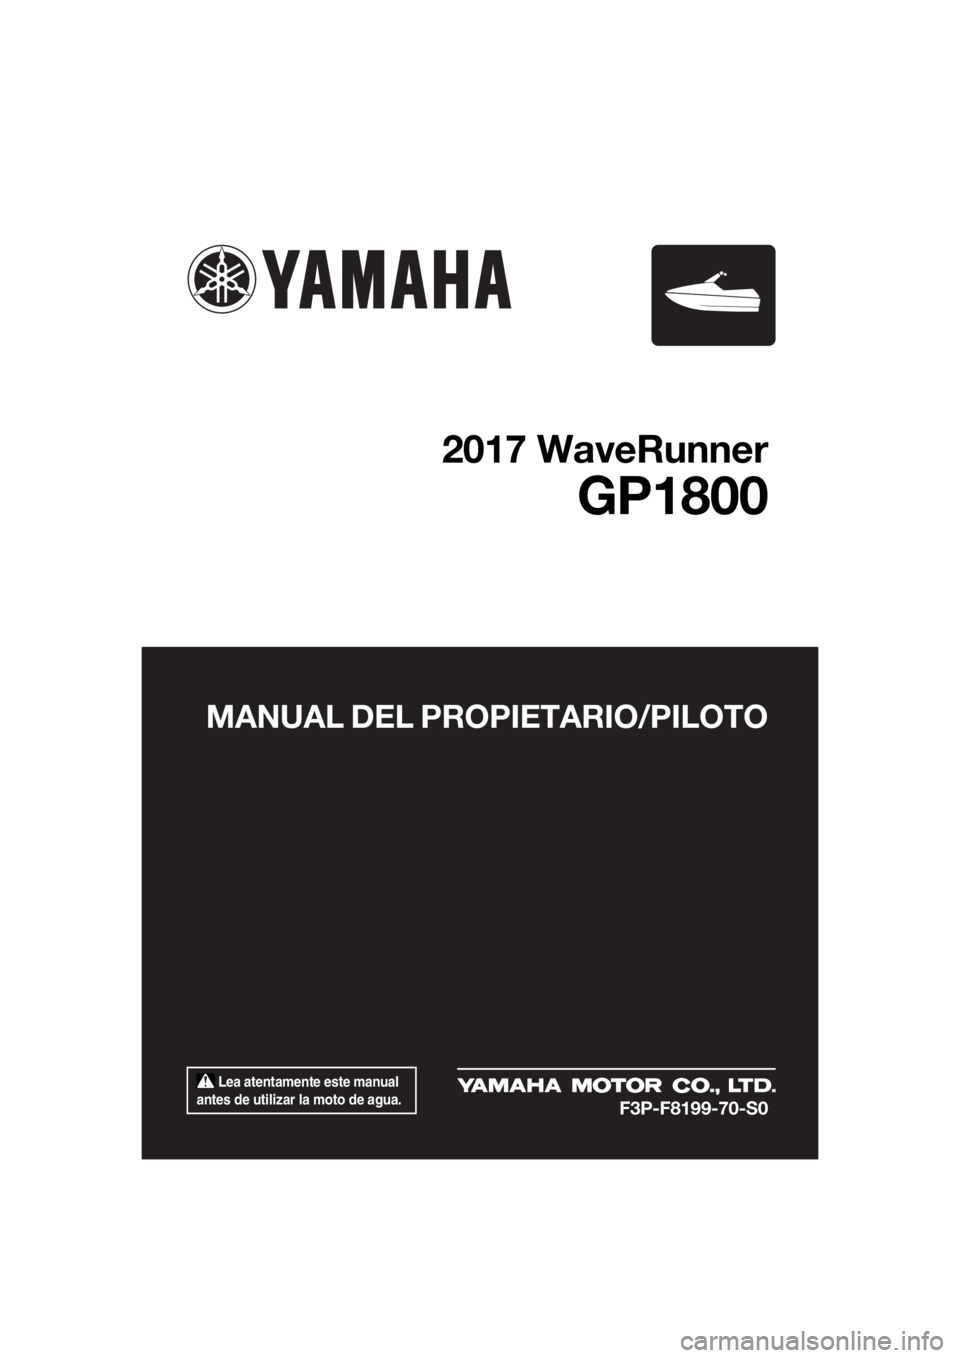 YAMAHA GP1800 2017  Manuale de Empleo (in Spanish)  Lea atentamente este manual 
antes de utilizar la moto de agua.
MANUAL DEL PROPIETARIO/PILOTO
2017 WaveRunner
GP1800
F3P-F8199-70-S0
UF3P70S0.book  Page 1  Thursday, August 25, 2016  2:20 PM 